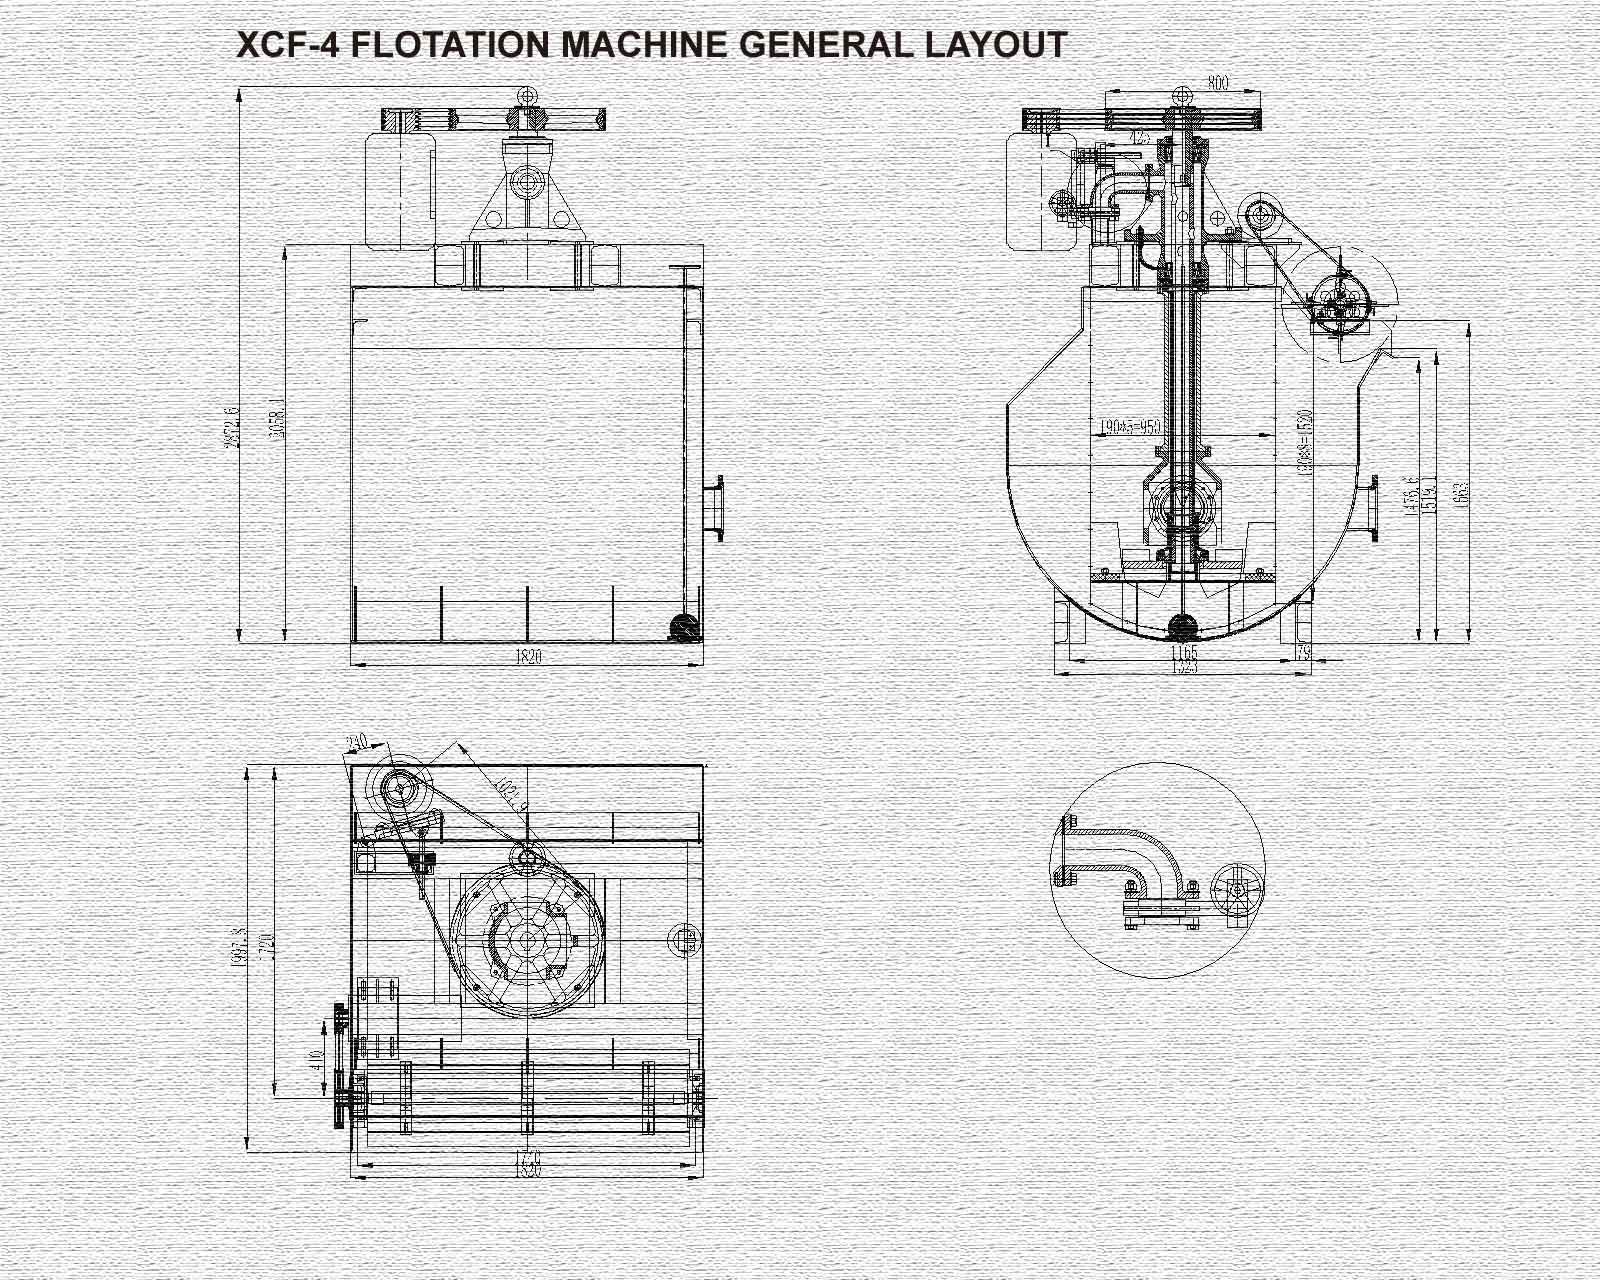 XCF flotation machine